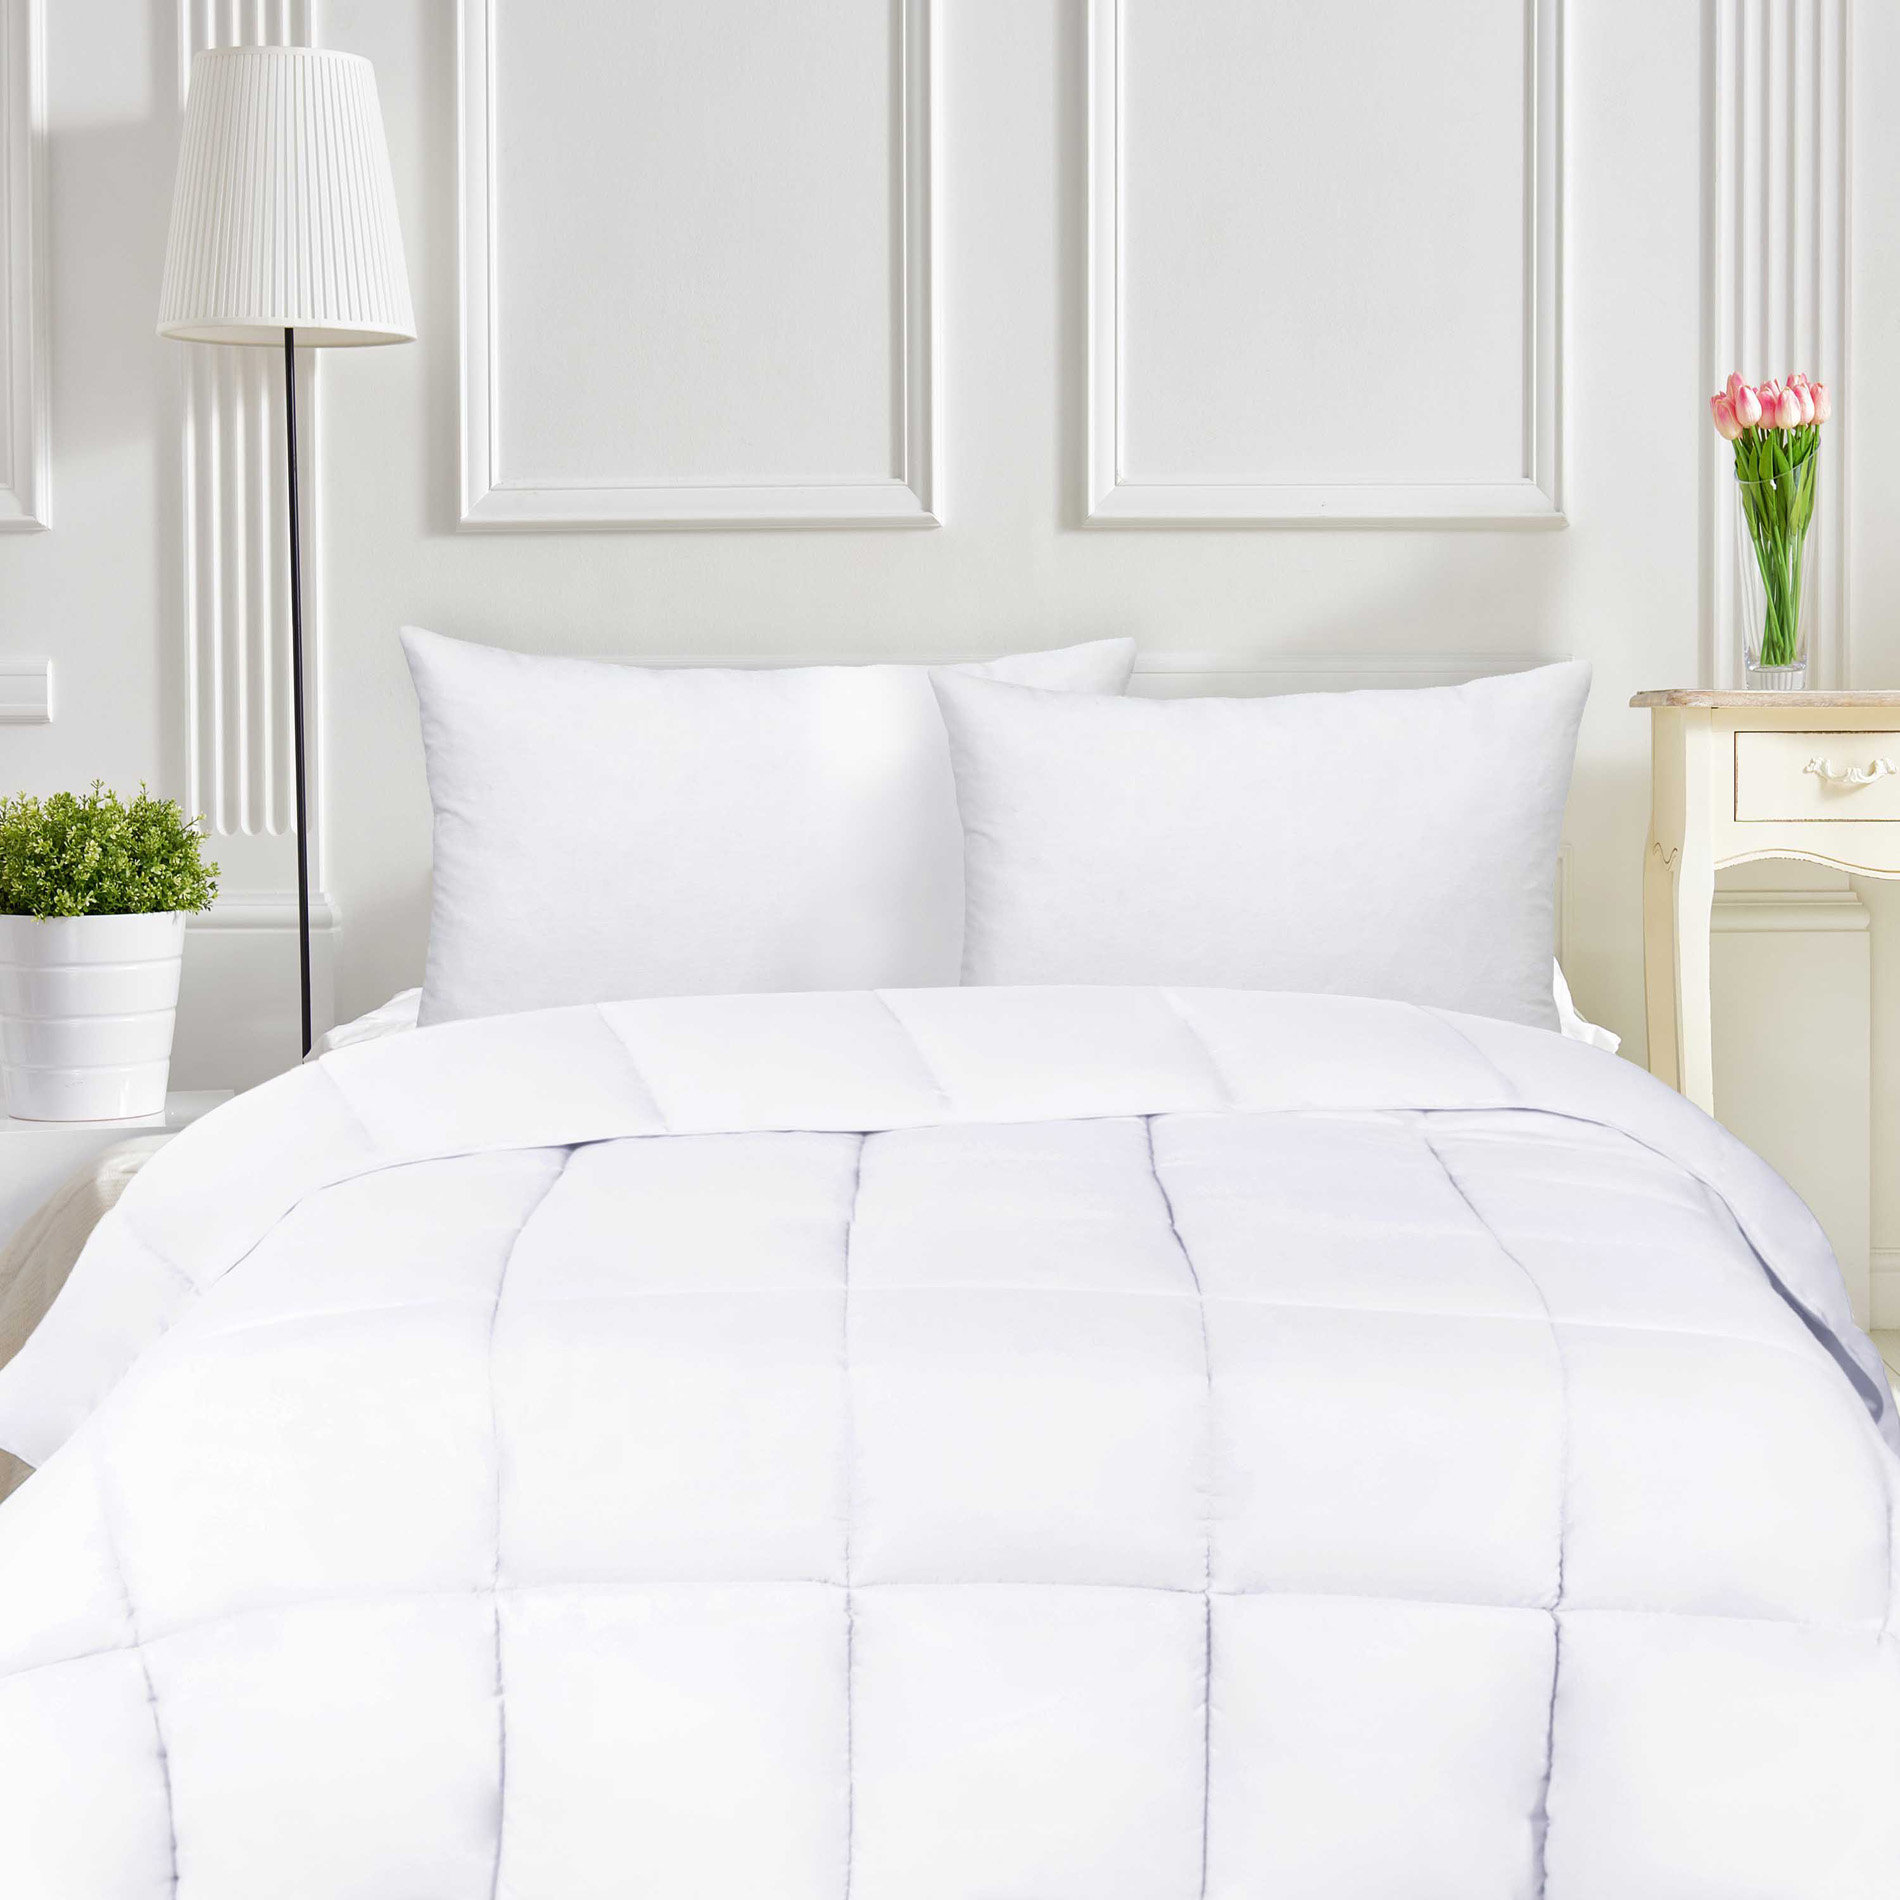 INGALIK All-Season Cotton 100% Bed Comforter Striped Cooling Down Alternative Qu 